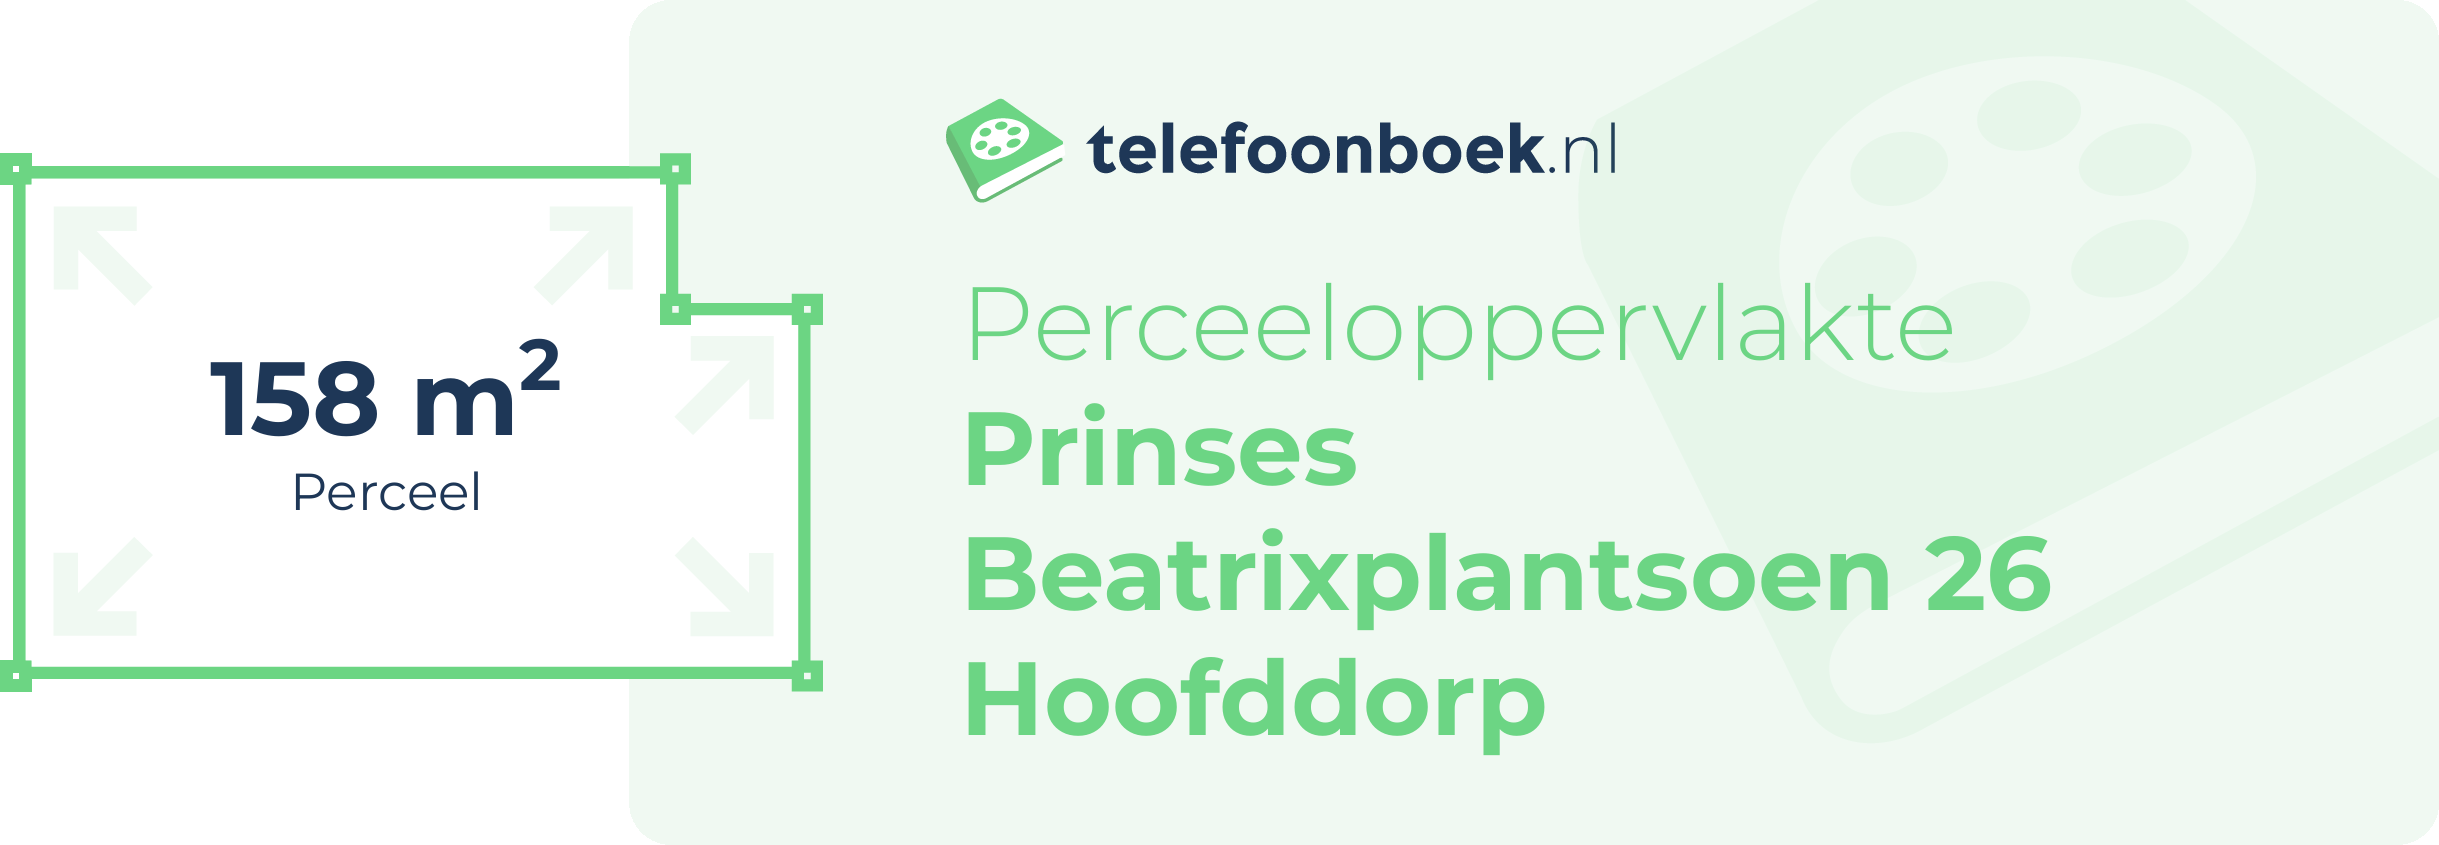 Perceeloppervlakte Prinses Beatrixplantsoen 26 Hoofddorp